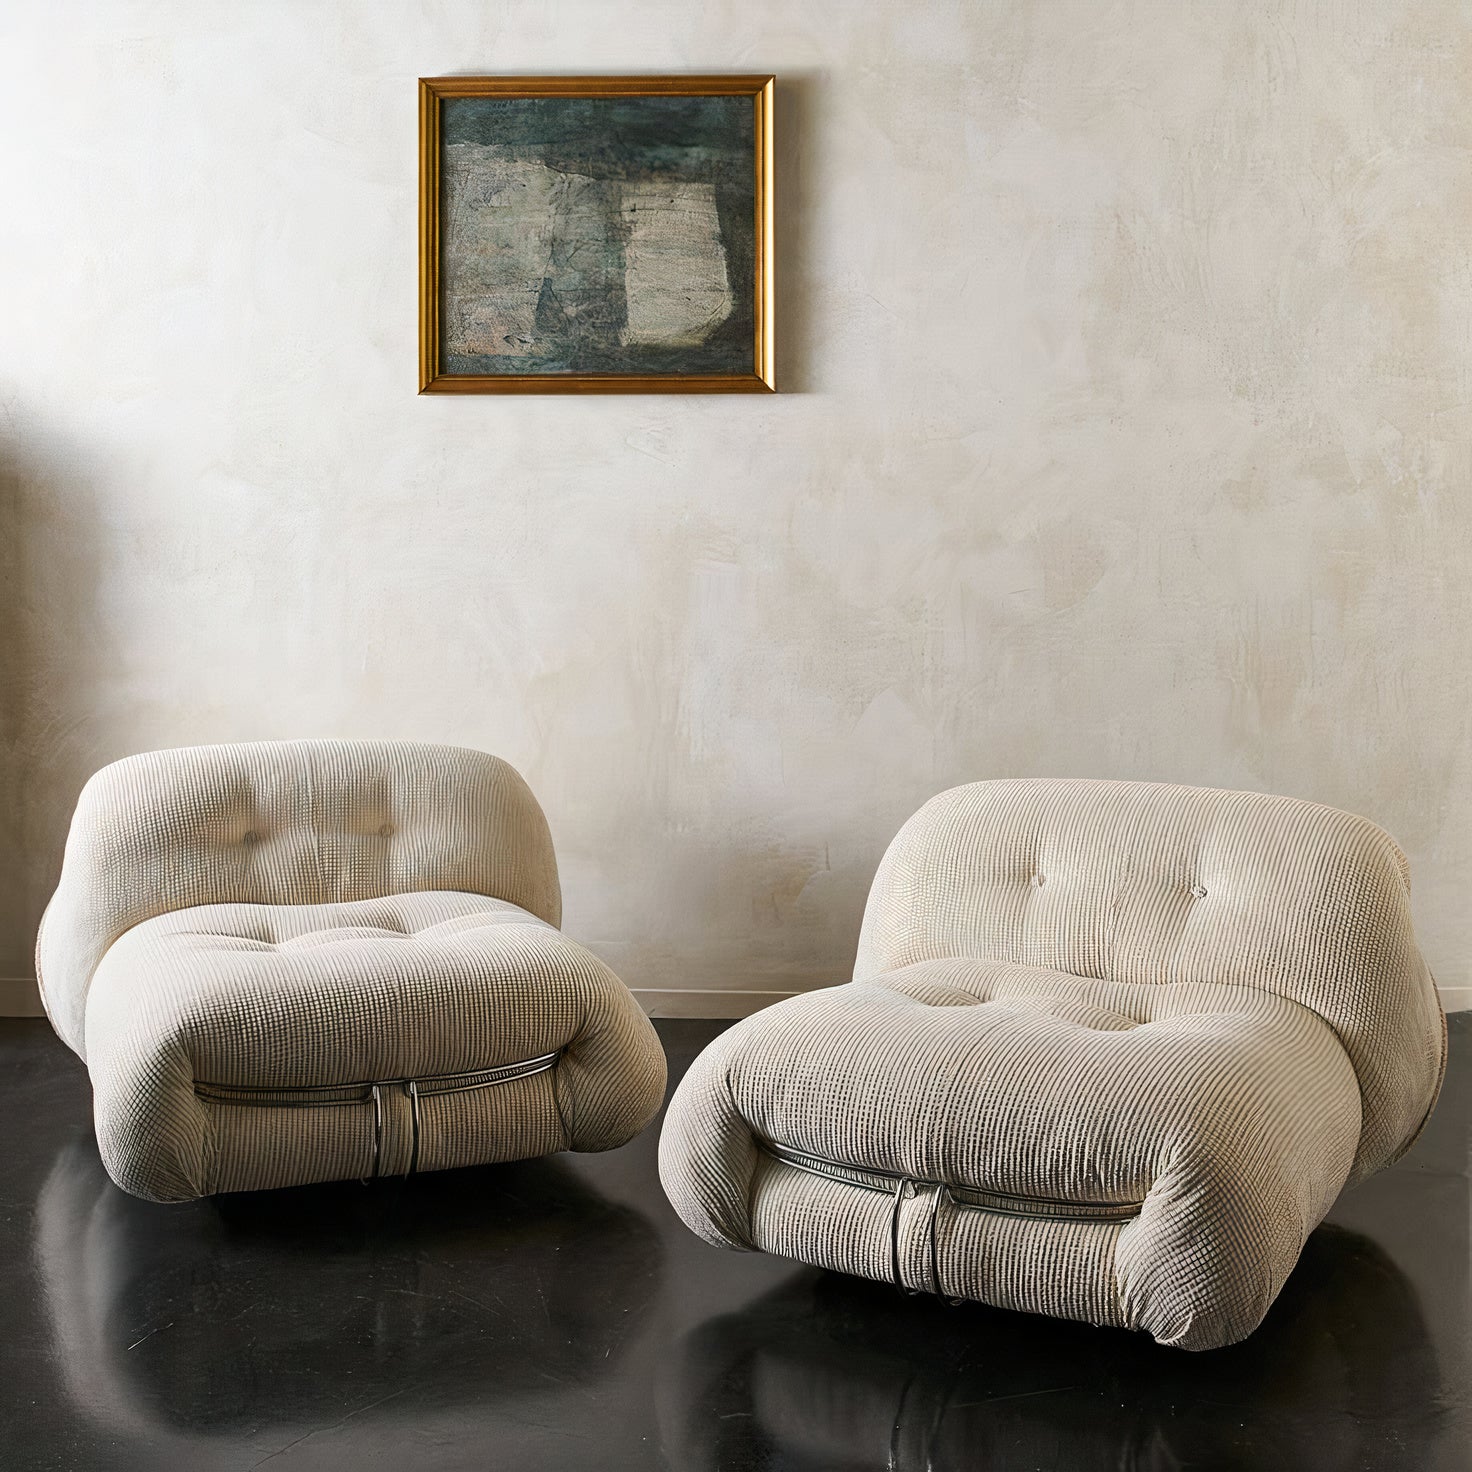 Soriana Afra & Tobia Scarpa 'Soriana' Lounge Chair